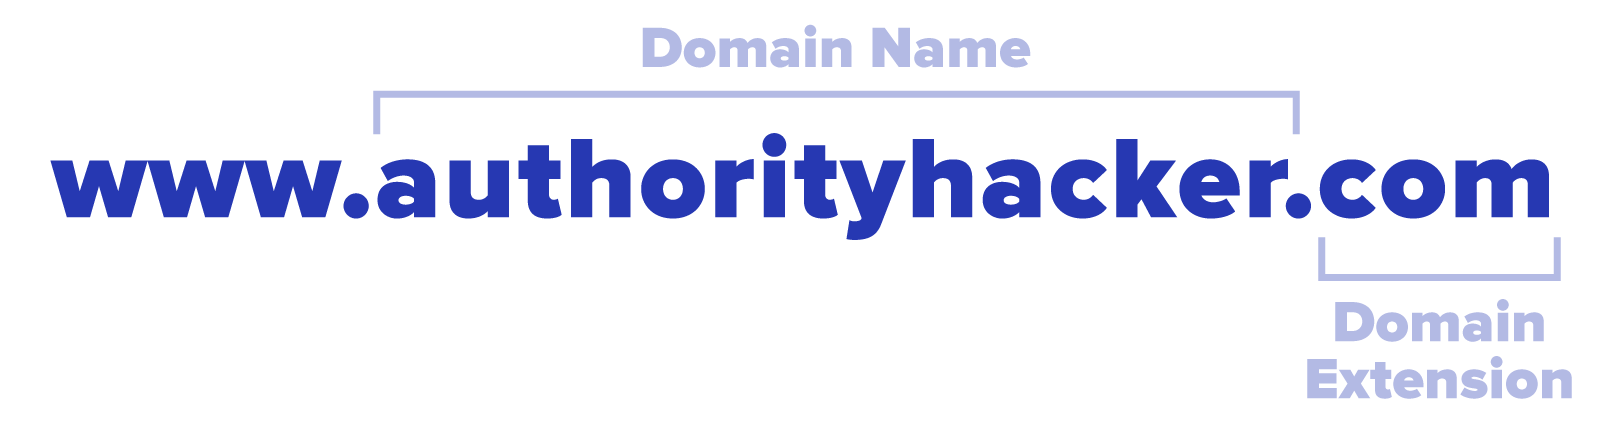 Authority Hacker domain name graphic